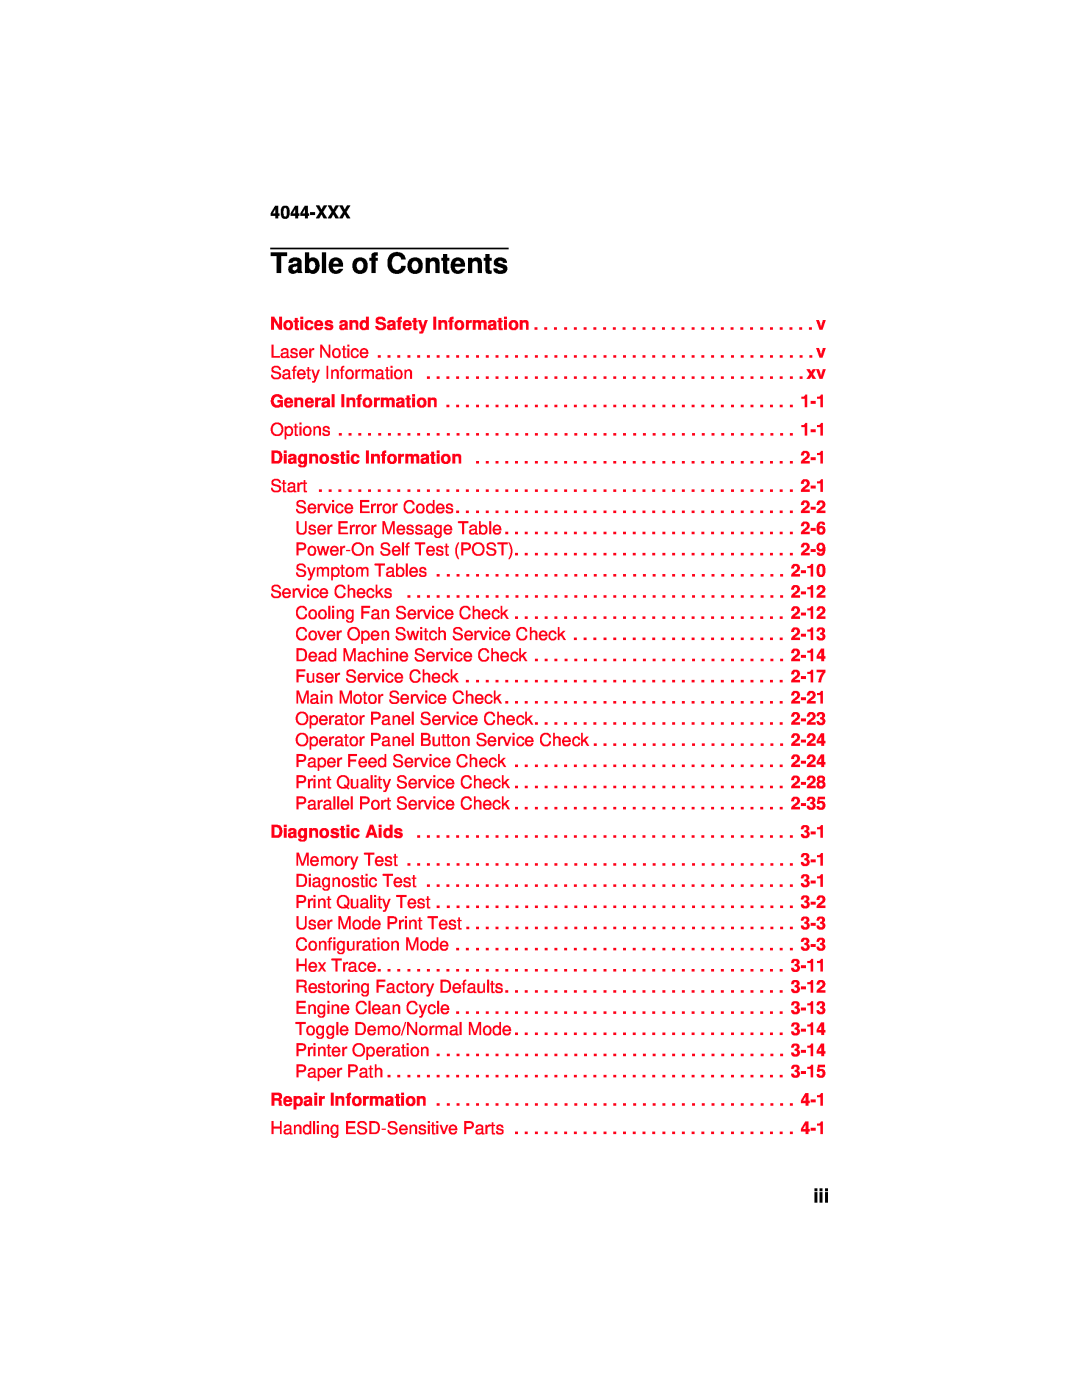 Lexmark E310 manual Table of Contents, 4044-XXX 